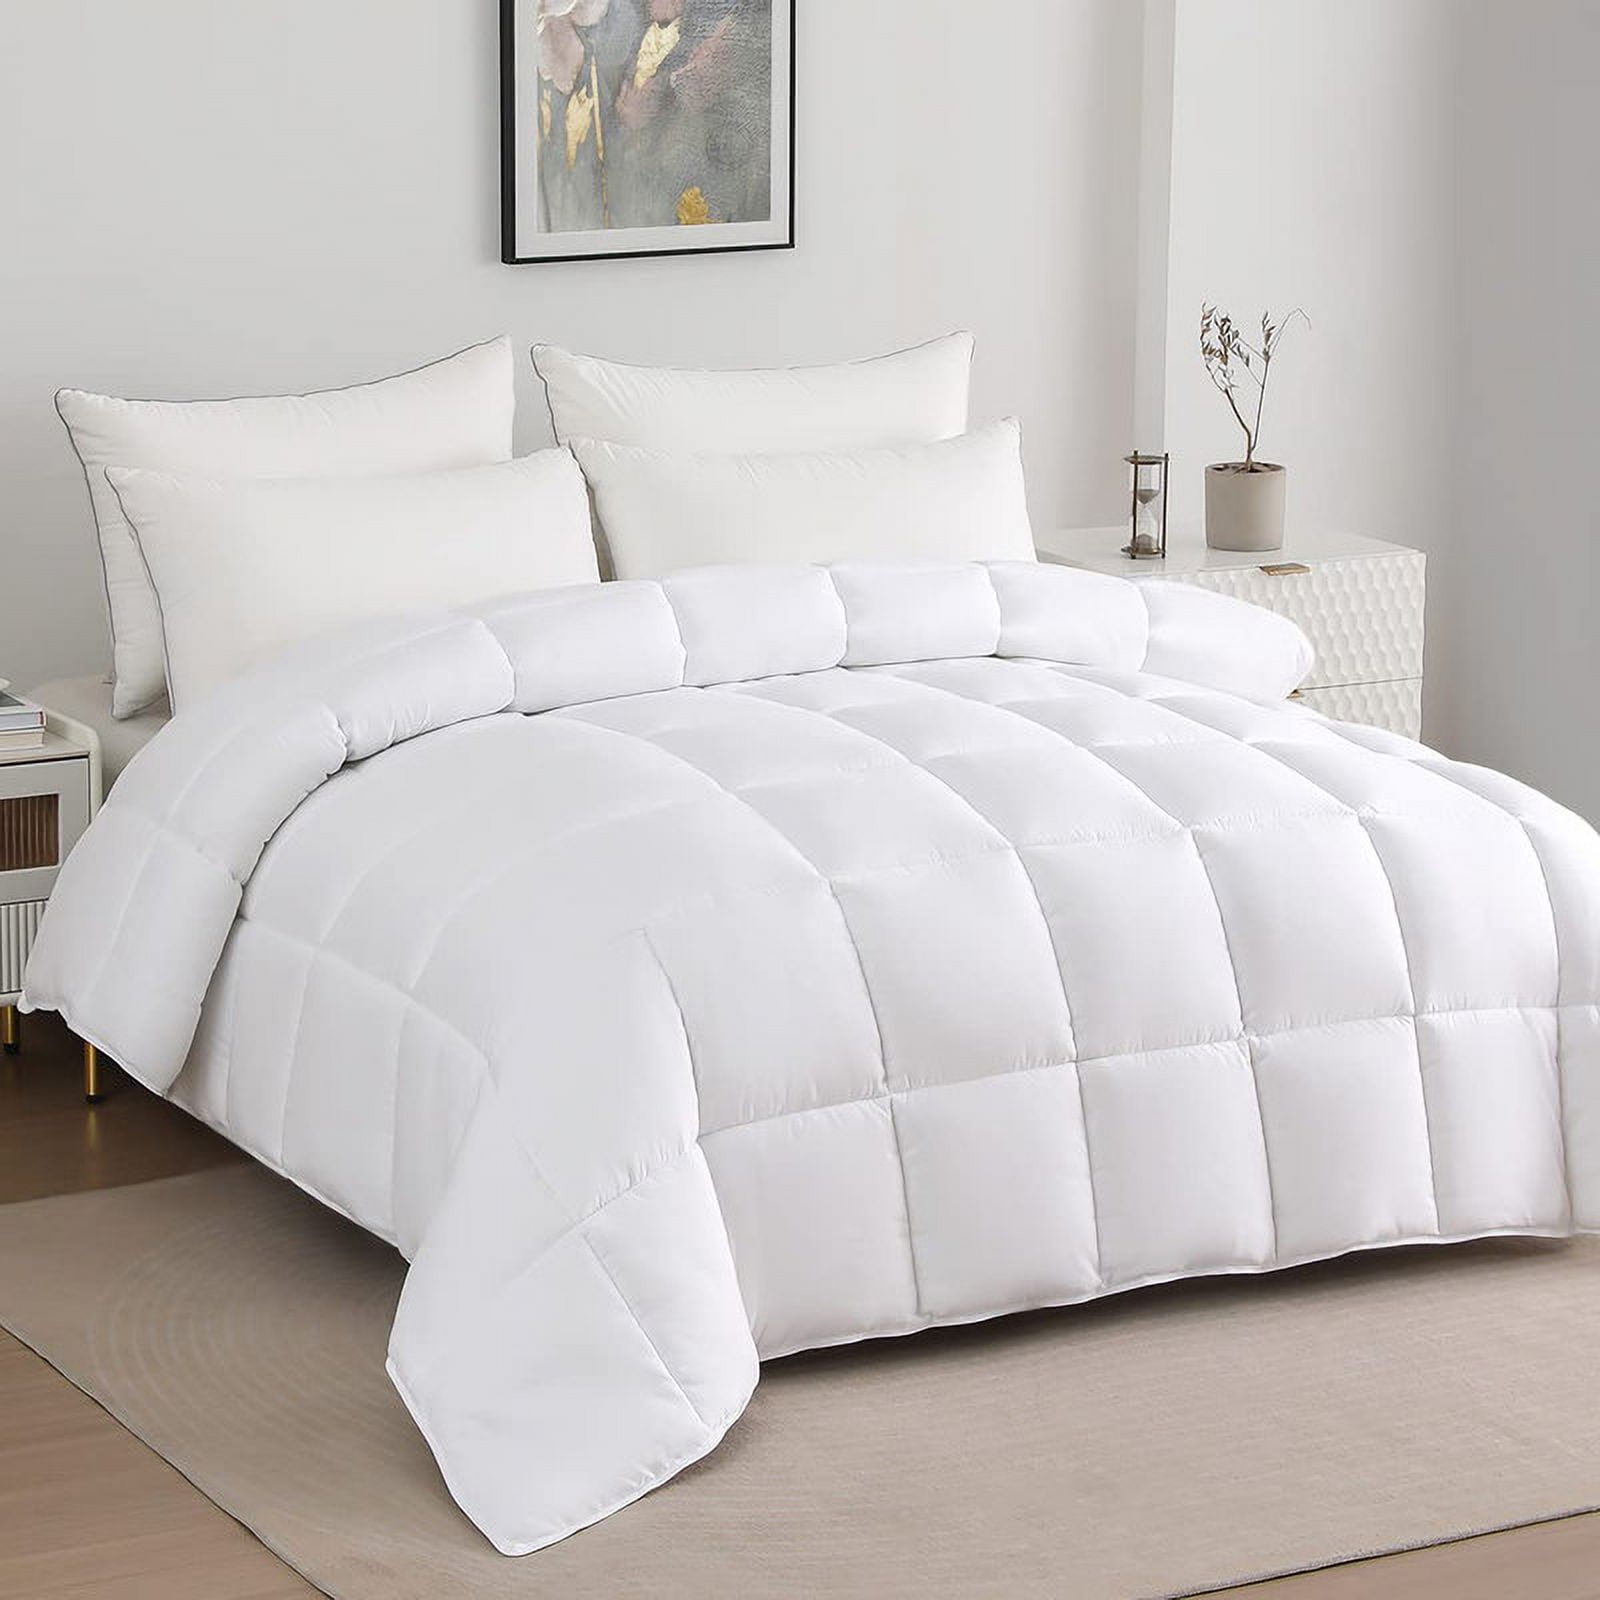 Serwall Luxury Solid Down Alternative Machine Washable White Comforters,  Twin